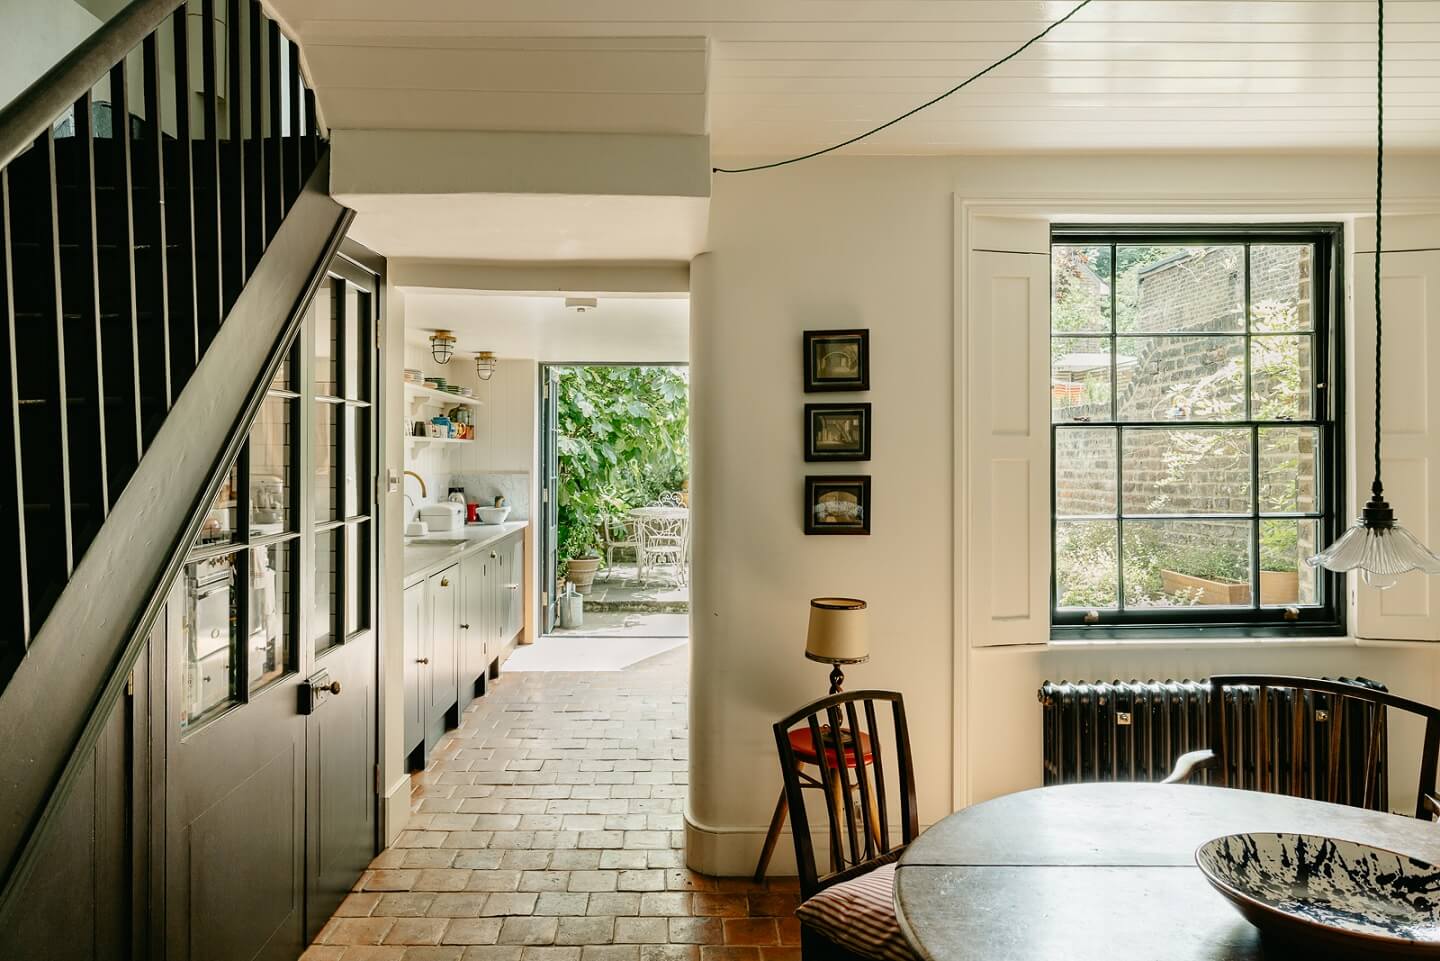 basement-kitchen-dining-room-cottage-style-terracotta-floor-nordroom